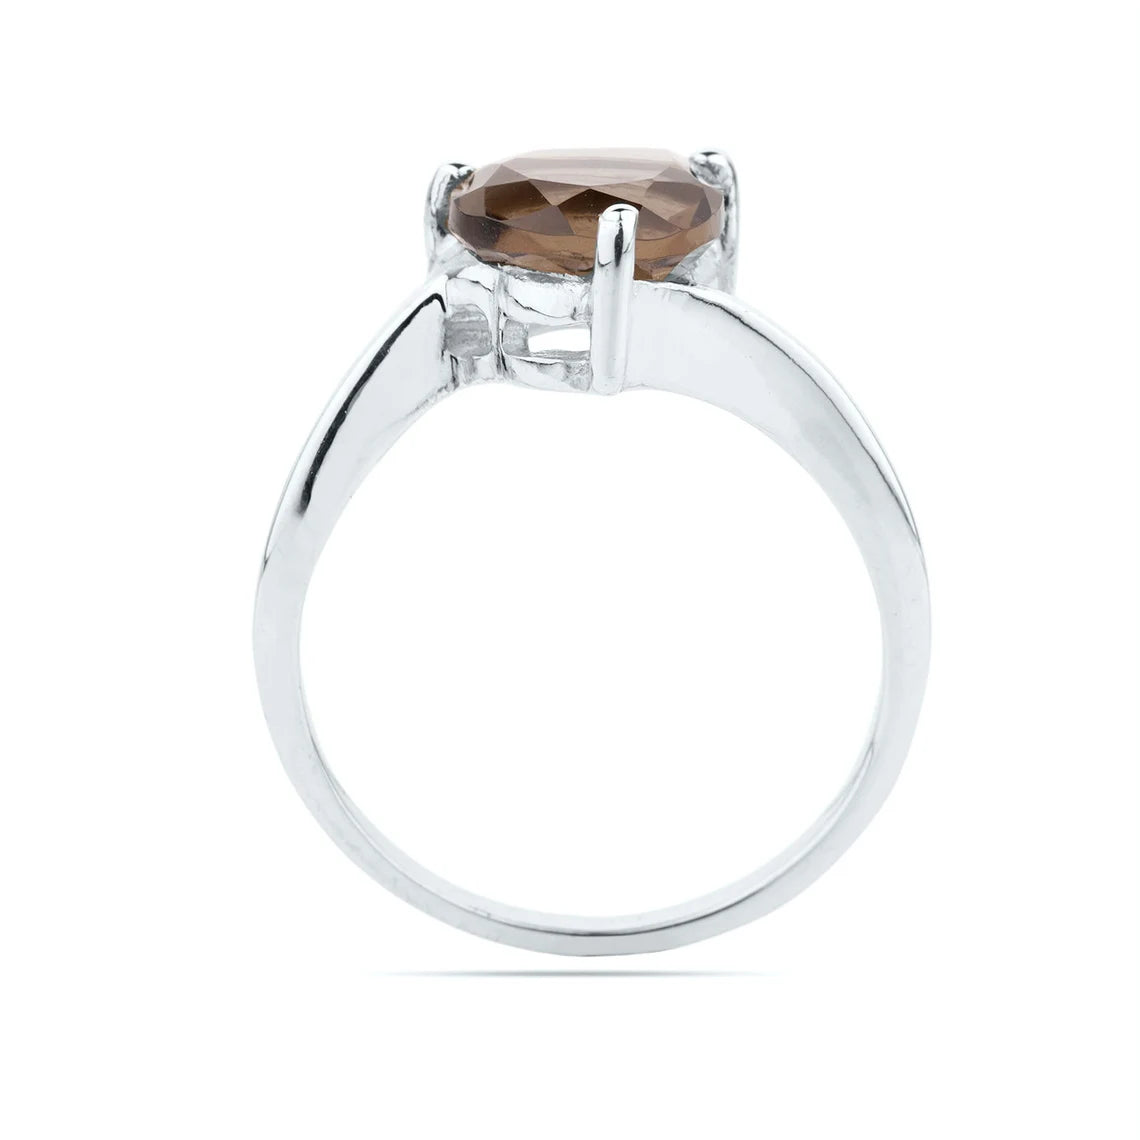 Smoky Quartz Ring, Sterling Silver Ring, Smoky Quartz Stone, Beautiful Ring, Natural Stone, Handmade Ring, Prong Ring, Gift